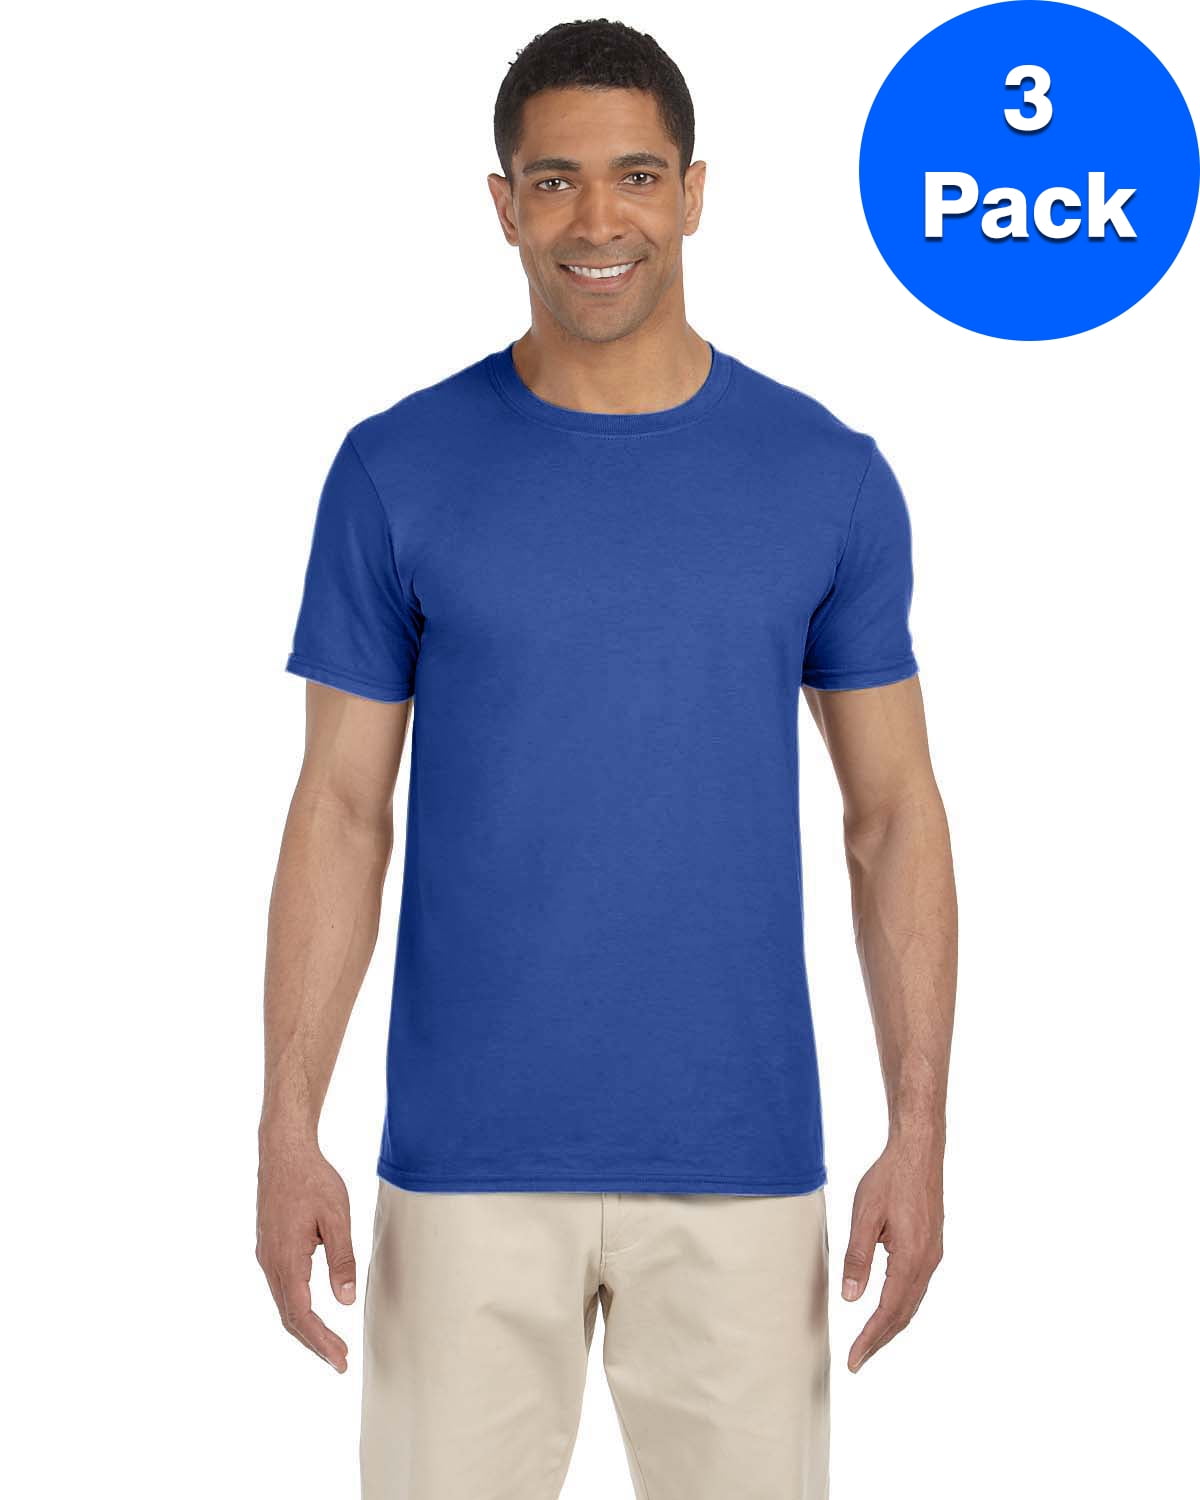 Mens 4.5 oz. SoftStyle T-Shirt 3 Pack - Walmart.com